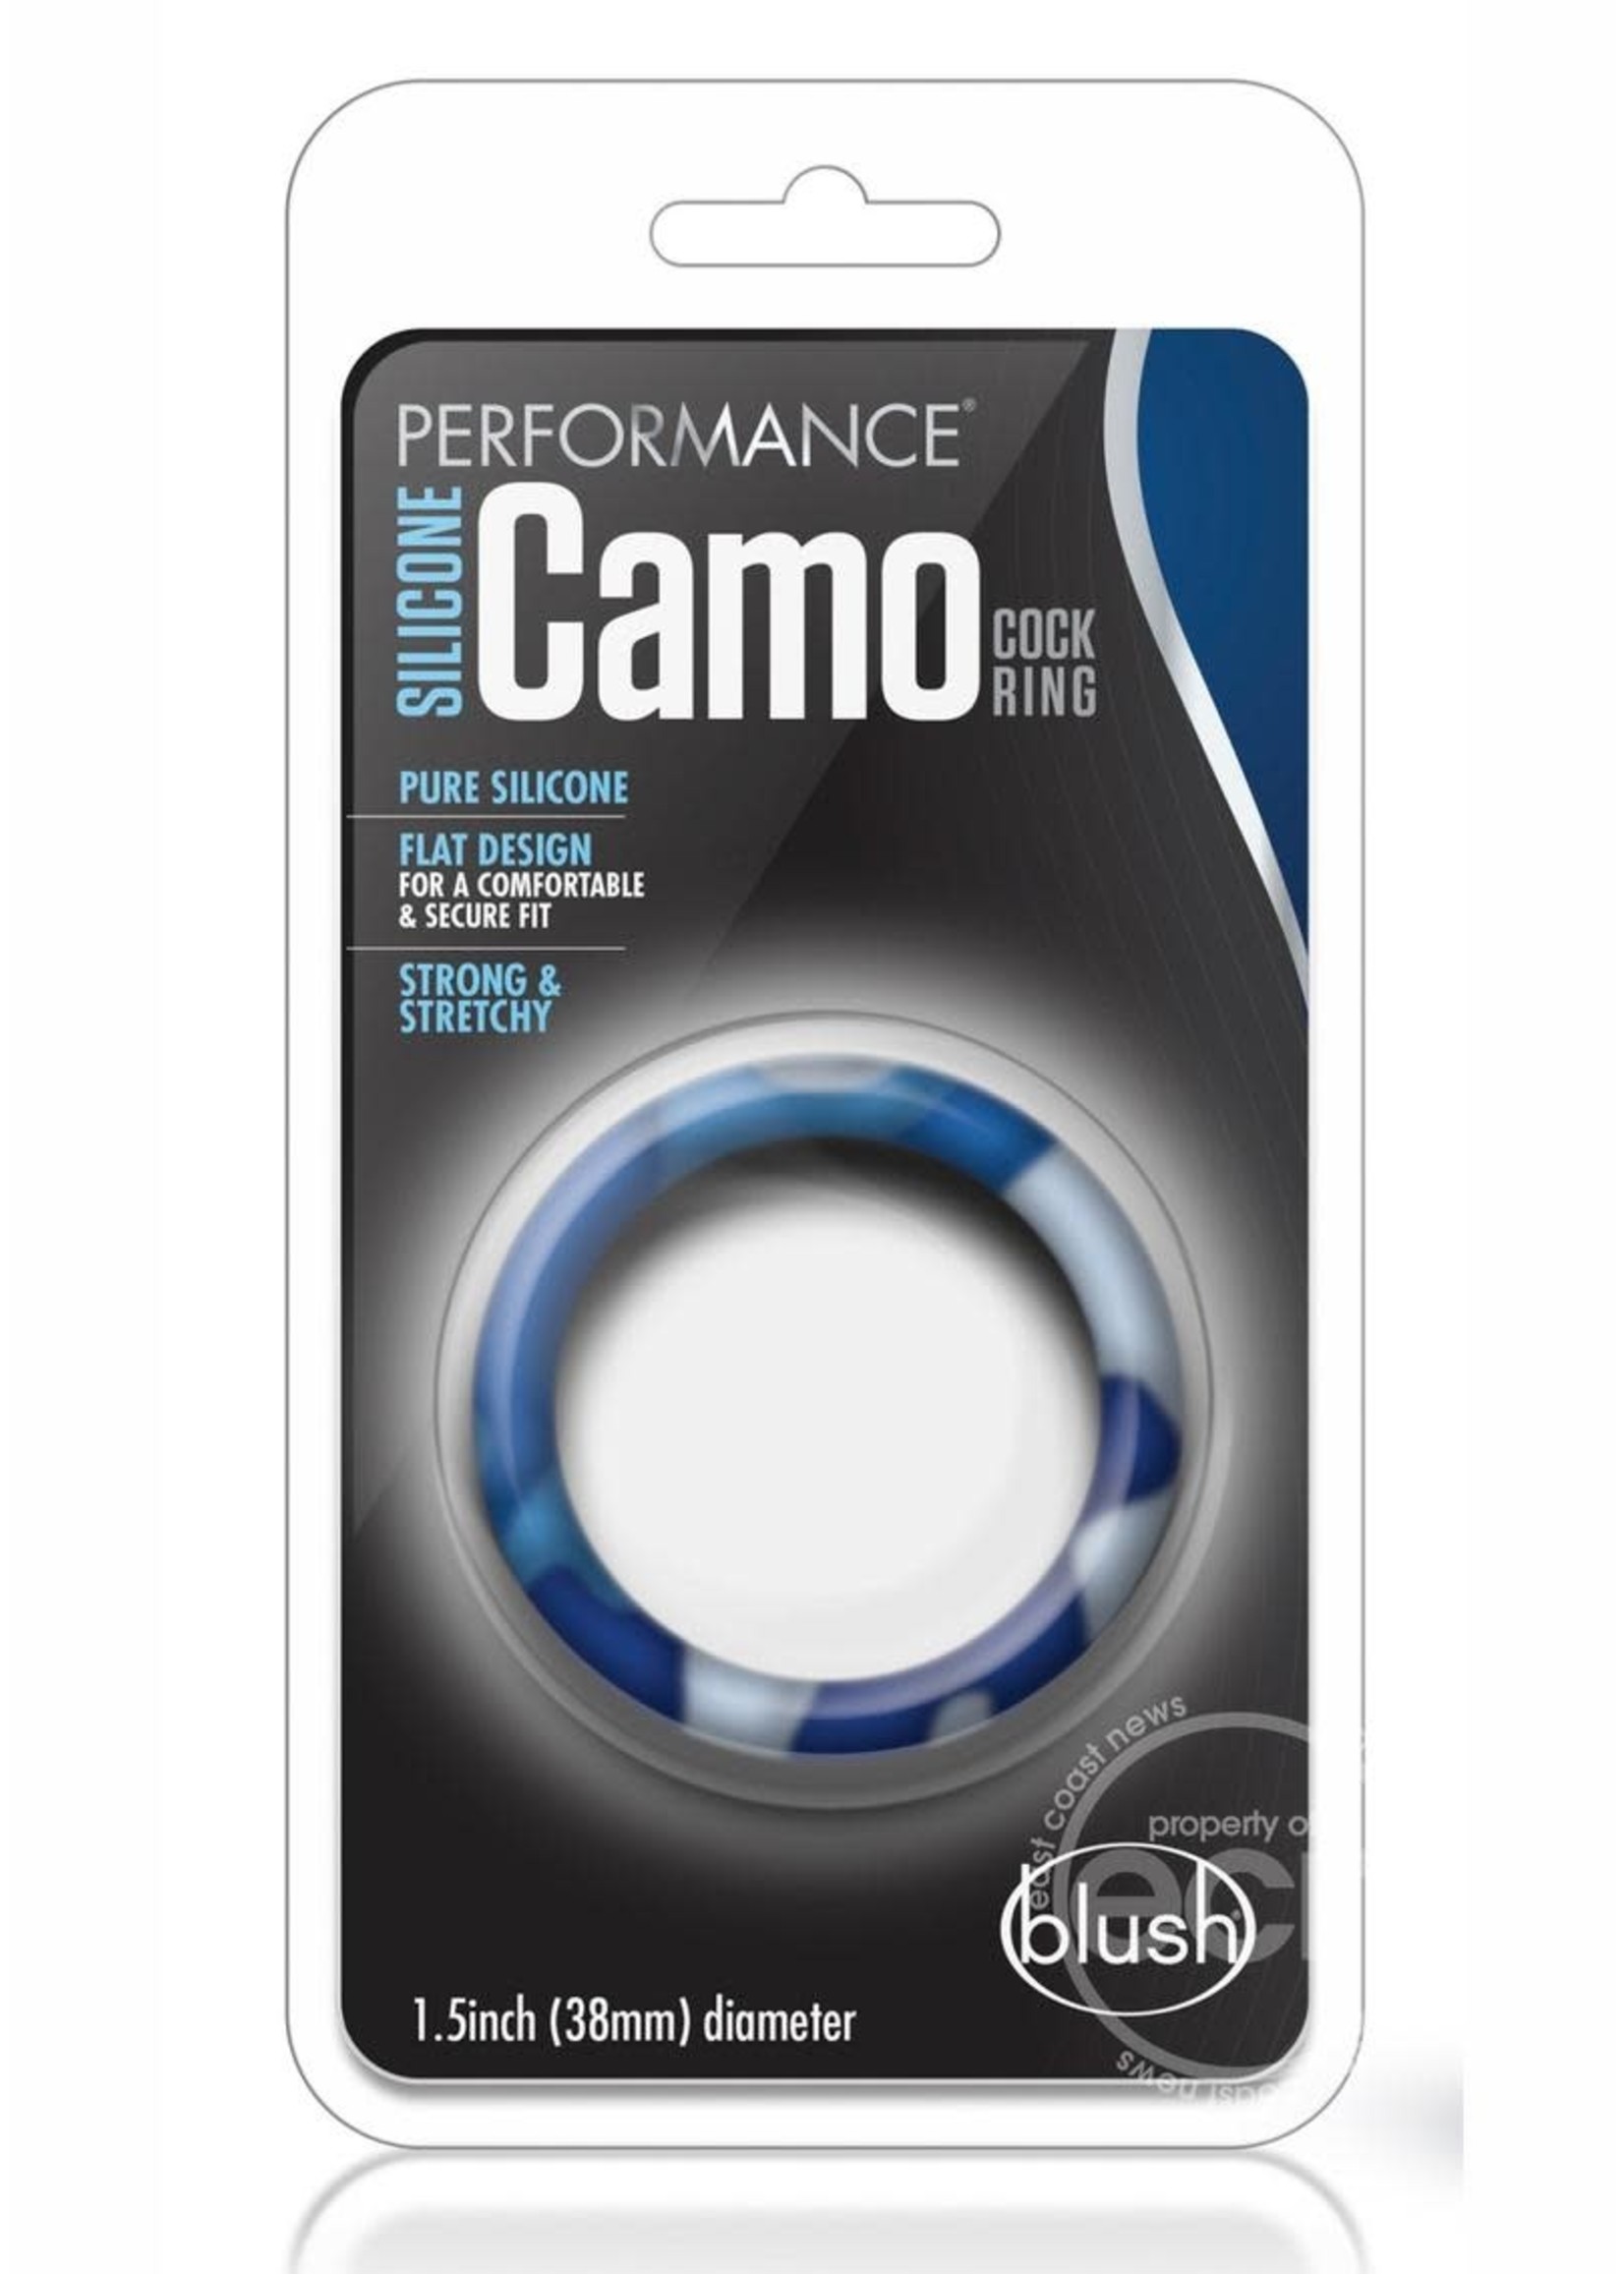 Blush Novelties Performance Silicone Camo Cock Ring - Blue Camouflage